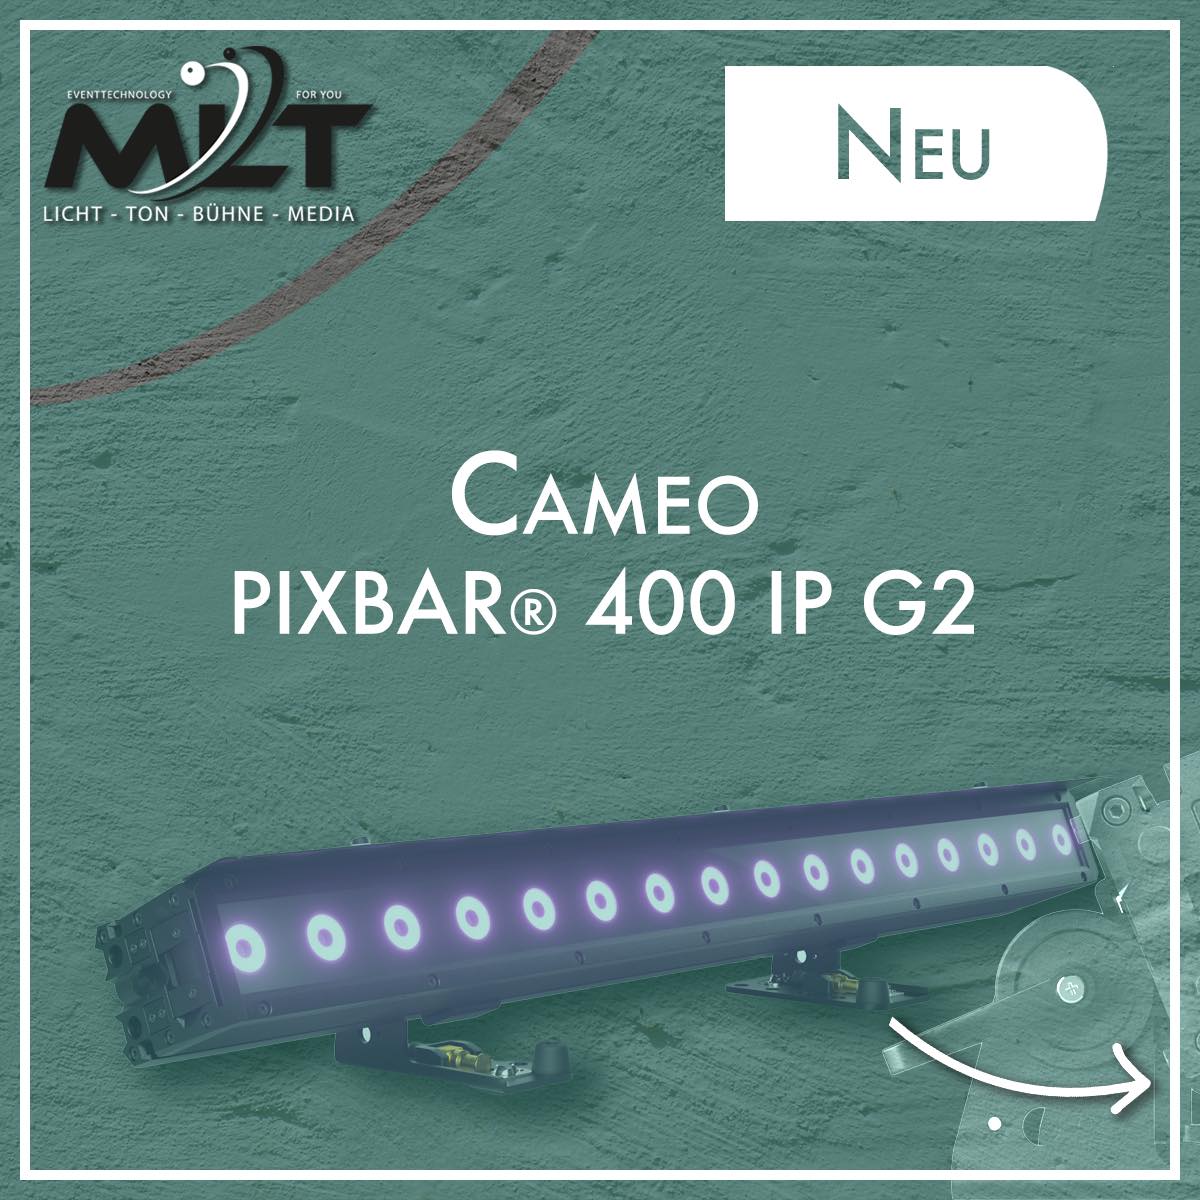 Cameo Pixbar 400 IP G2 dry-hire mieten